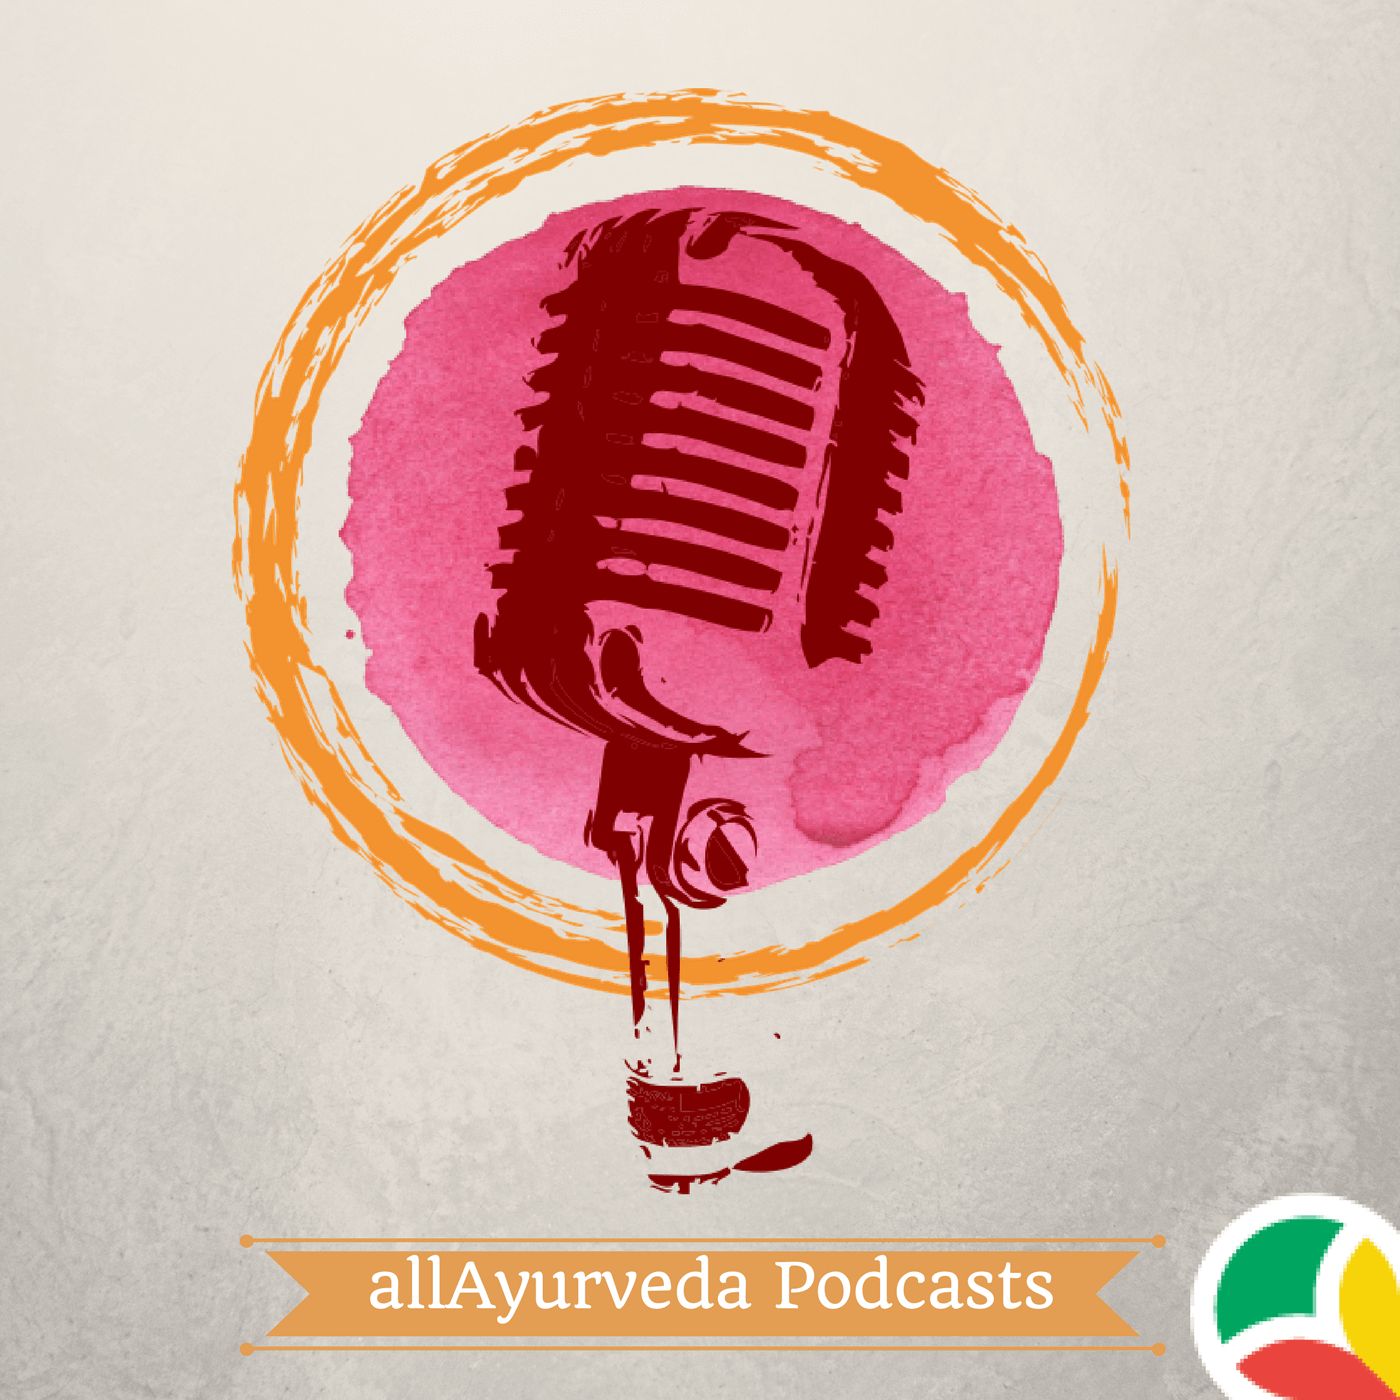 Intro to allAyurveda Podcasts